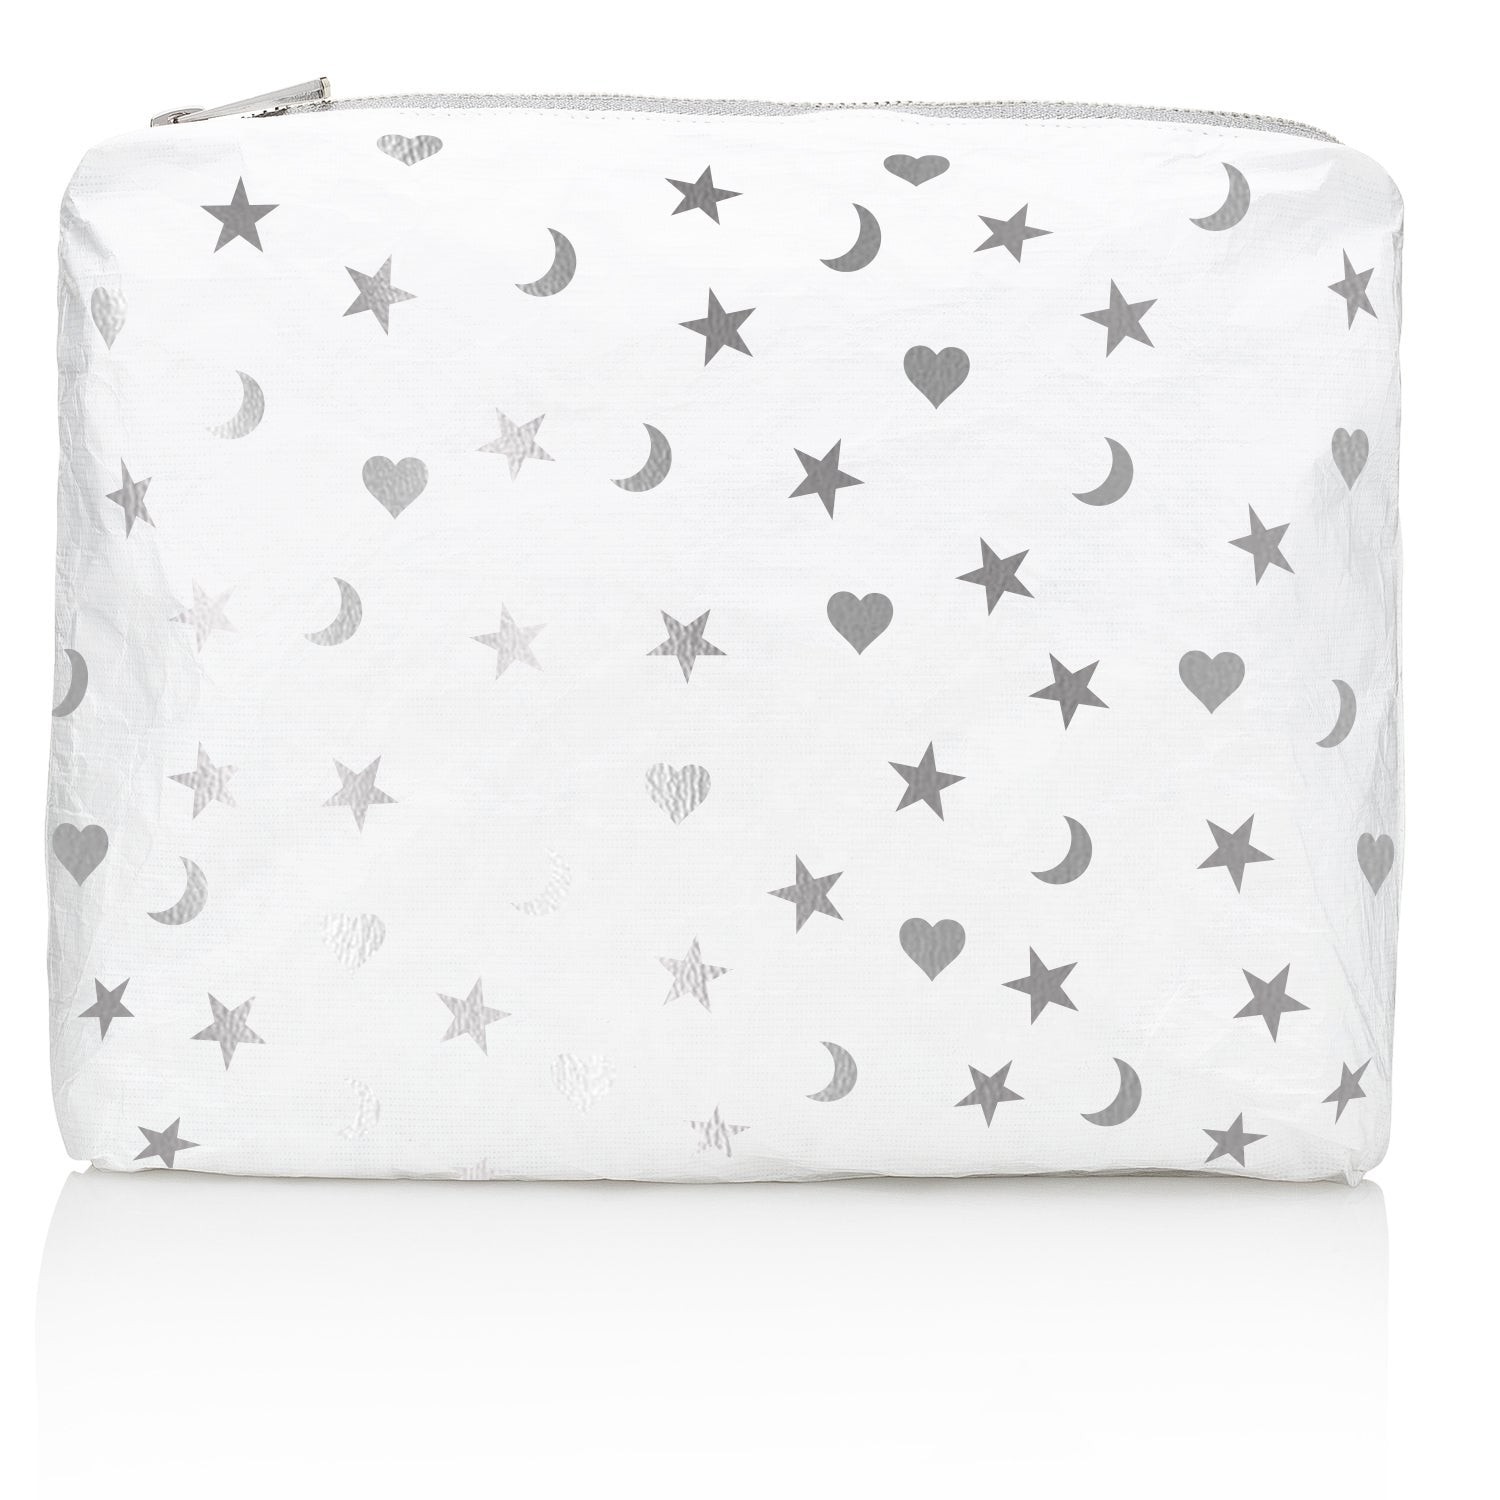 Medium Zipper Pack in Shimmer White with Heart, Moon & Stars